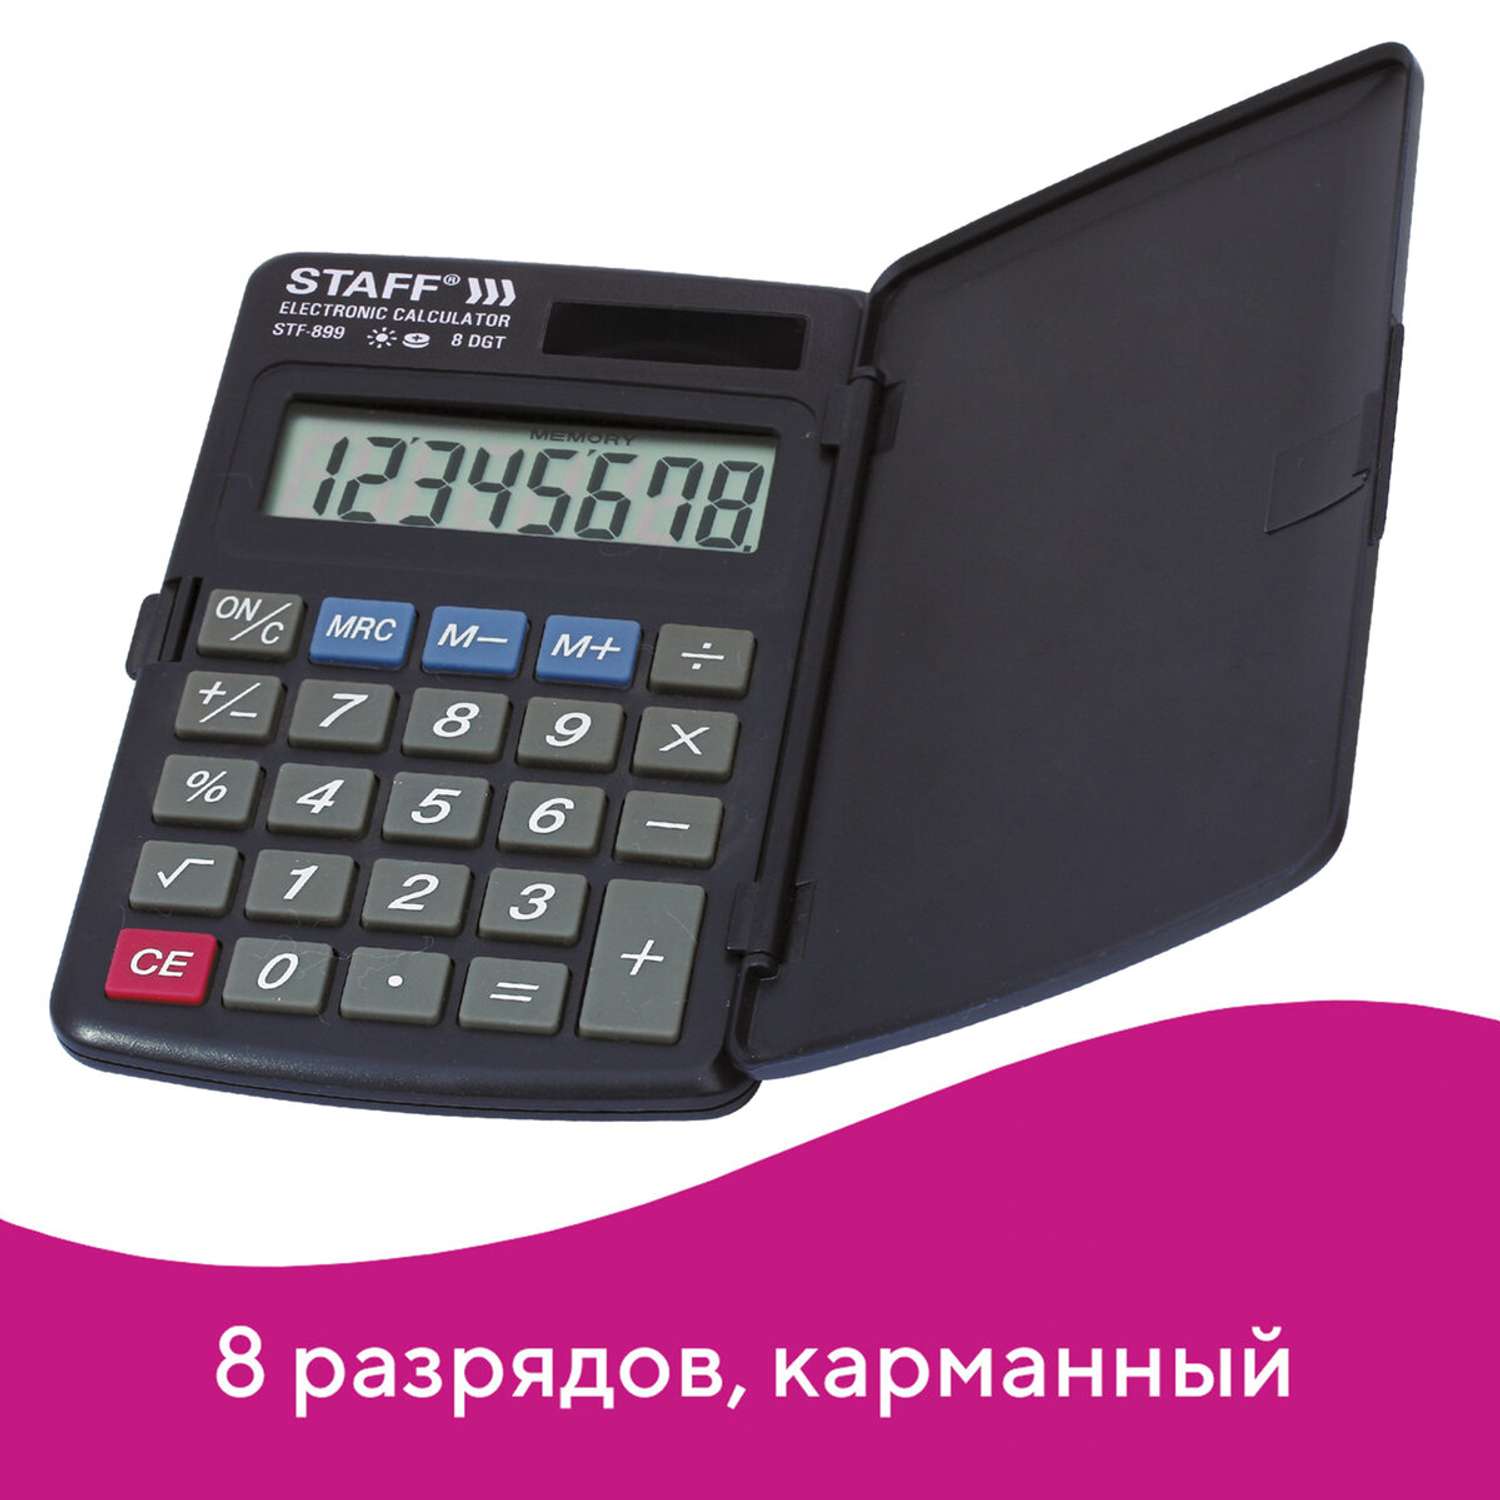 Калькулятор Staff карманный маленький Stf-899 8 разрядов - фото 2